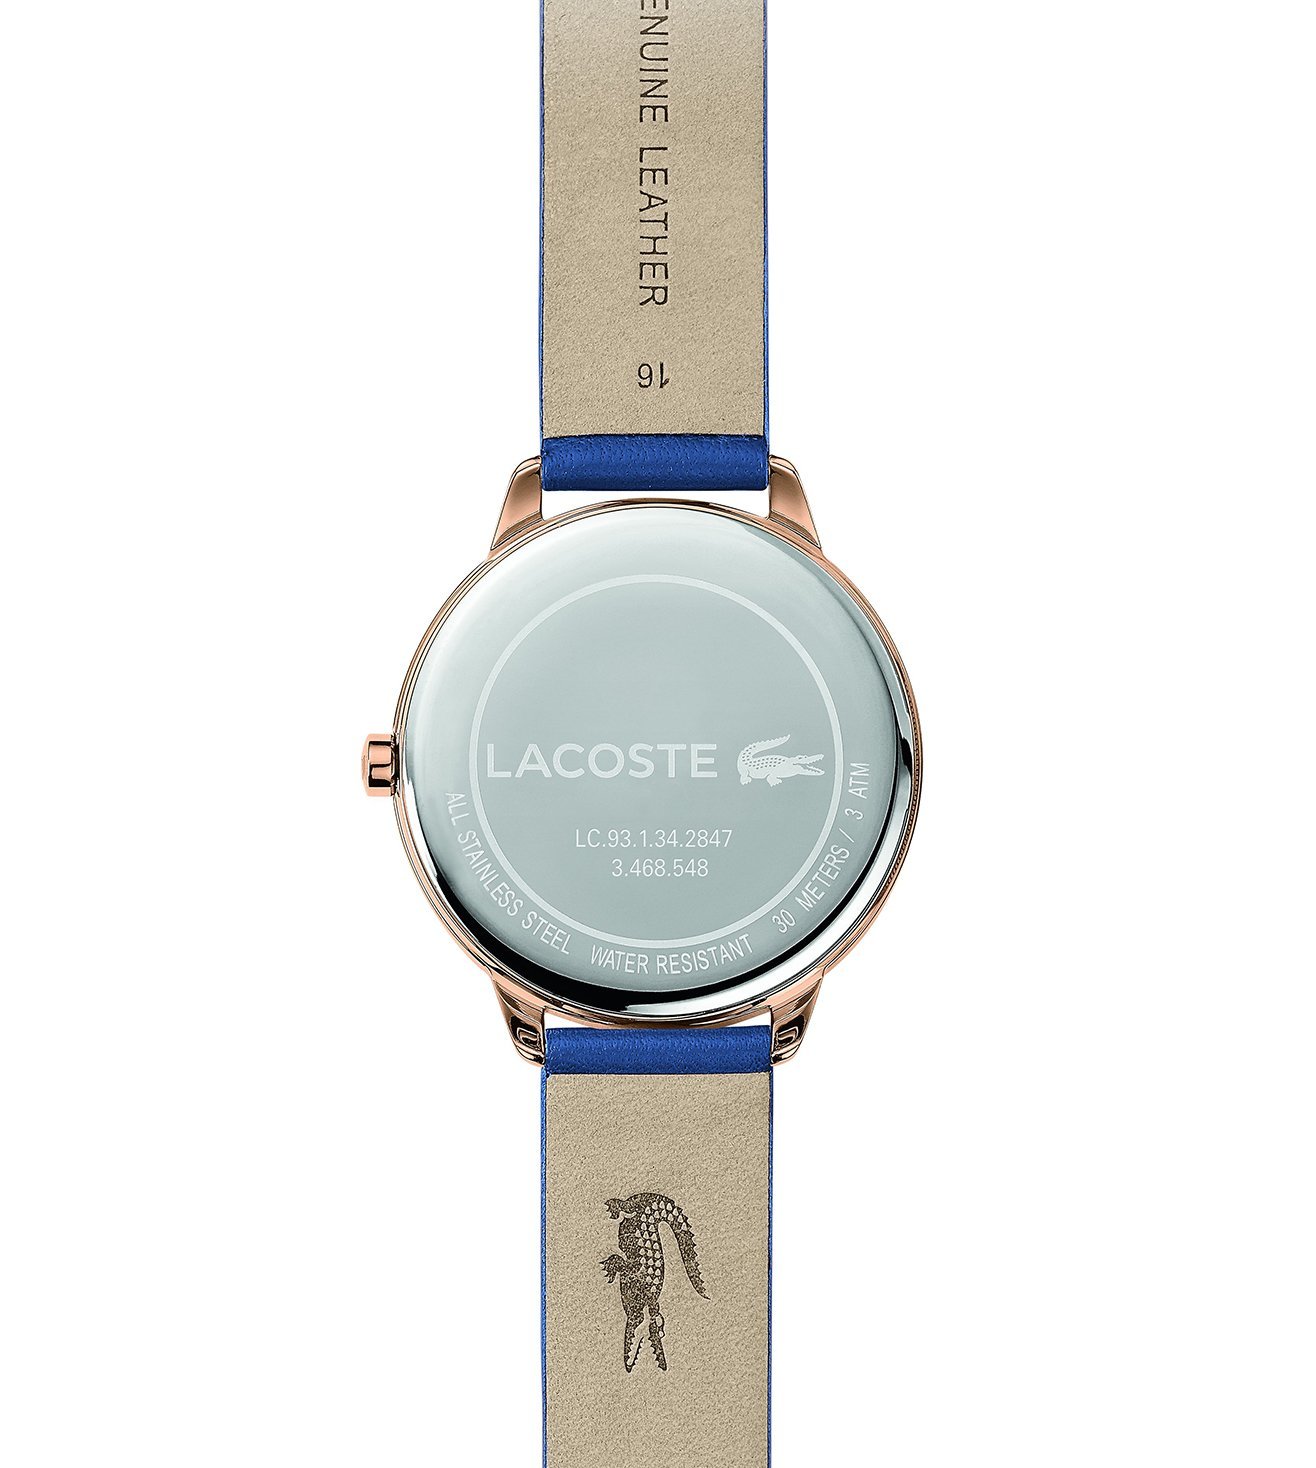 lacoste smart watch instructions